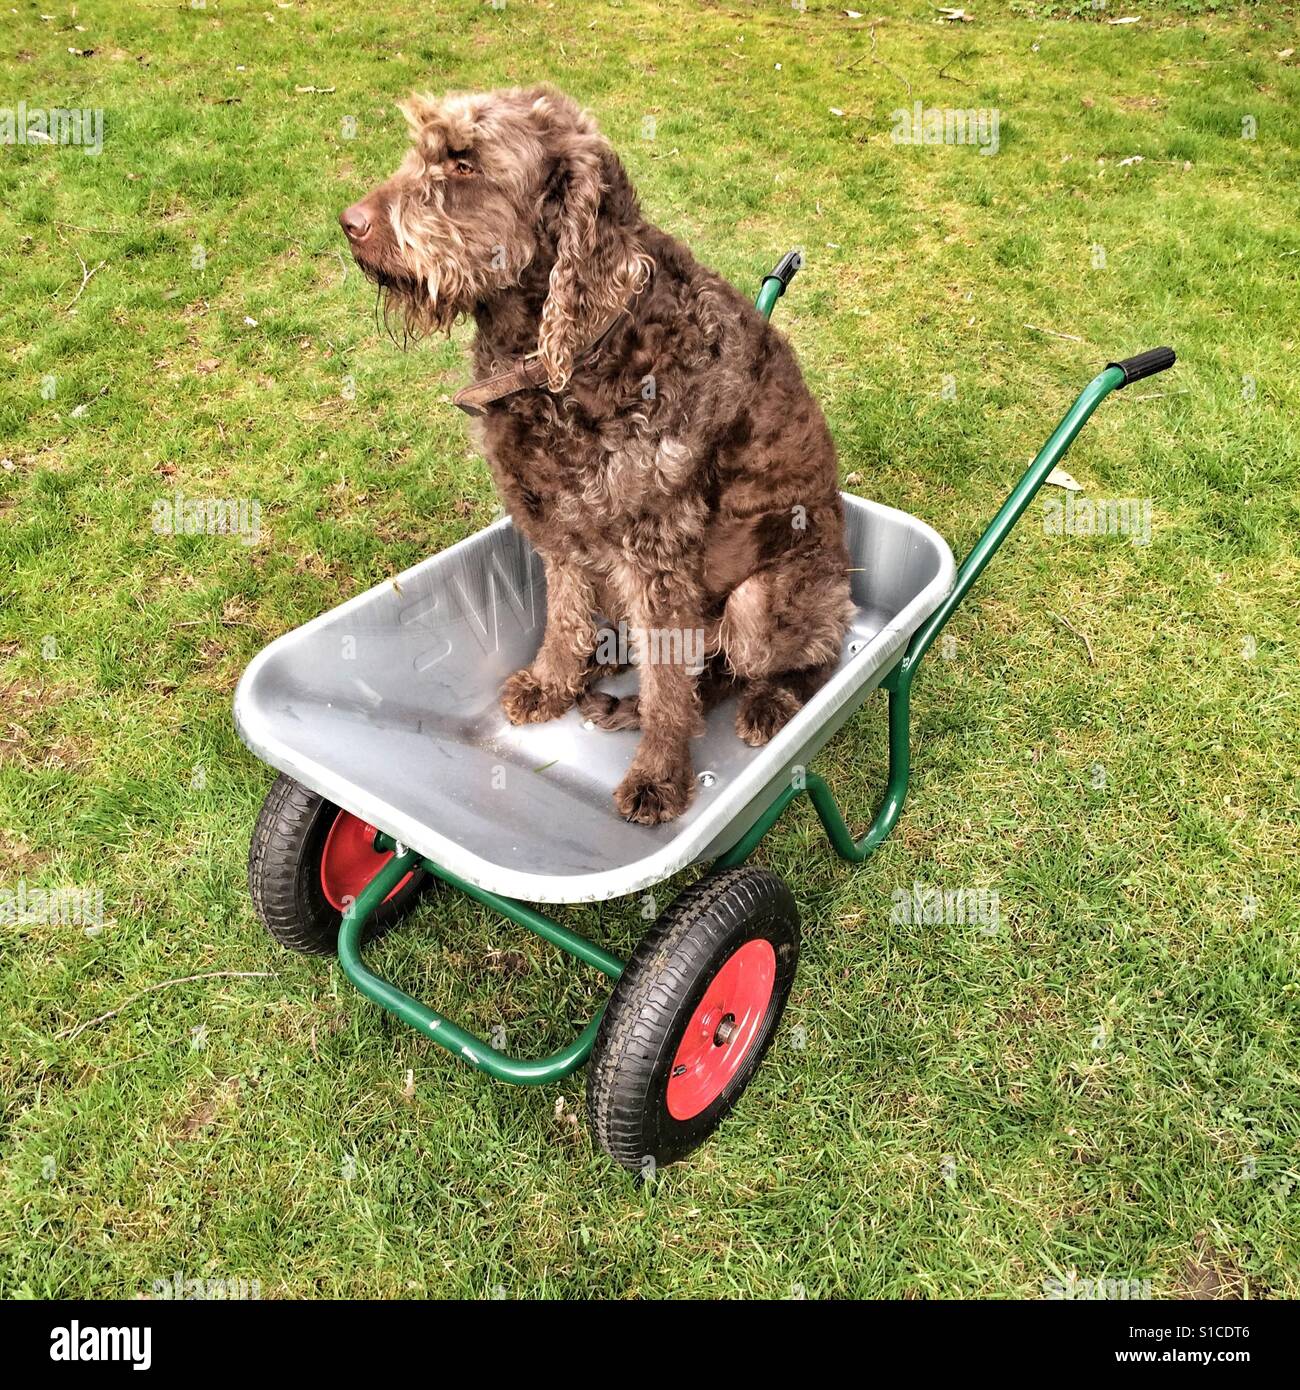 Brown Labradoodle sitting and a wheelbarrow, Hampshire, England, United Kingdom. Stock Photo